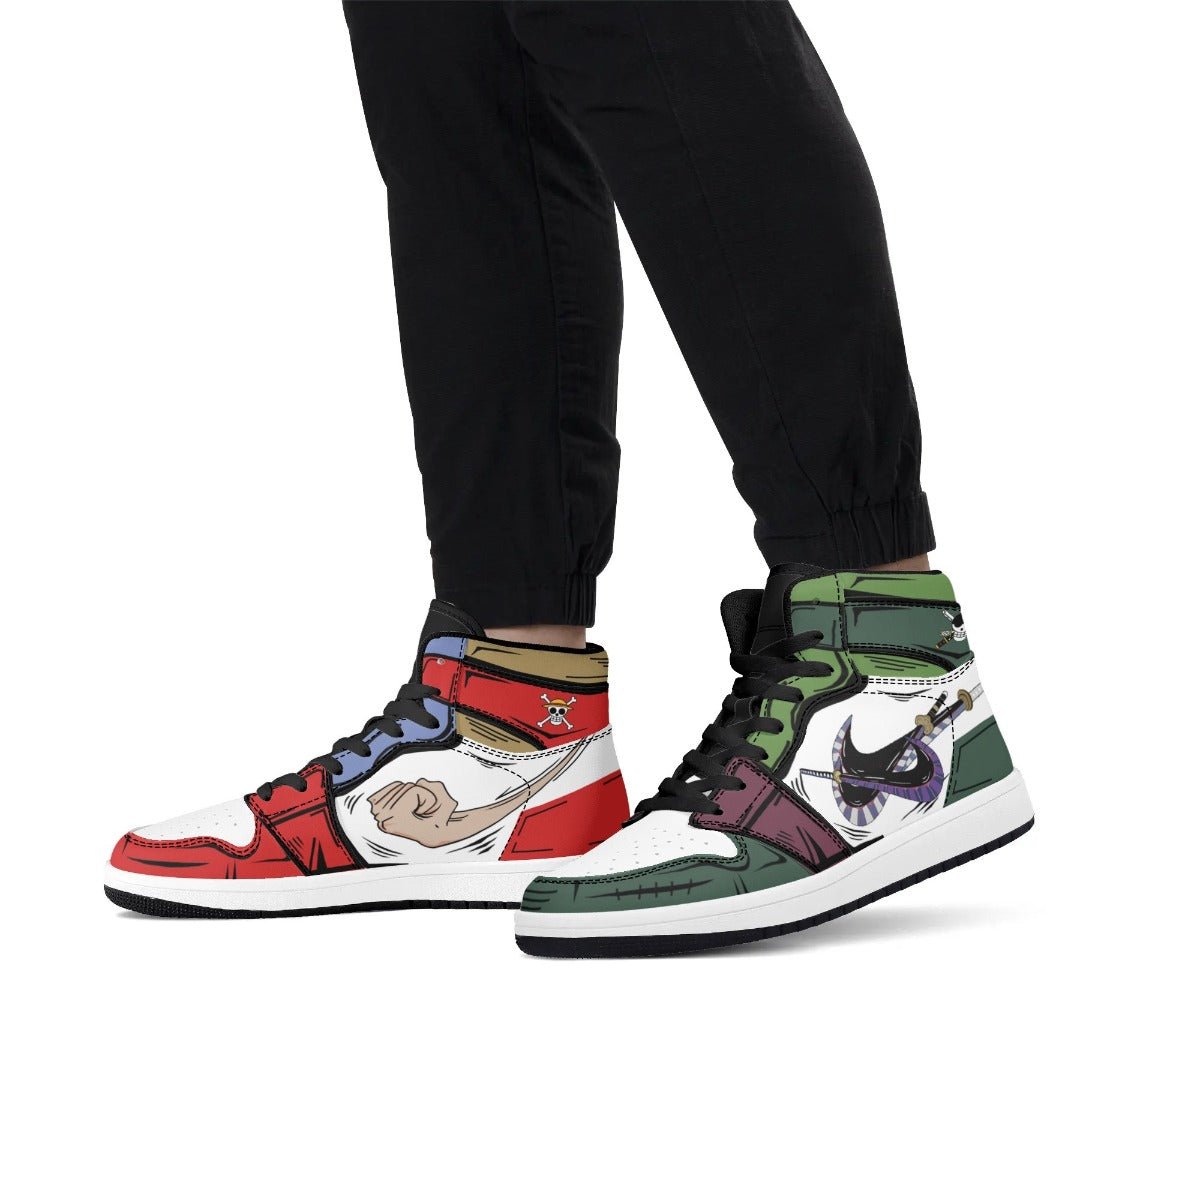 Saitama Jordan 1 Sneaker Boots, Limited Edition One Punch Man Anime Shoes -  Reallgraphics